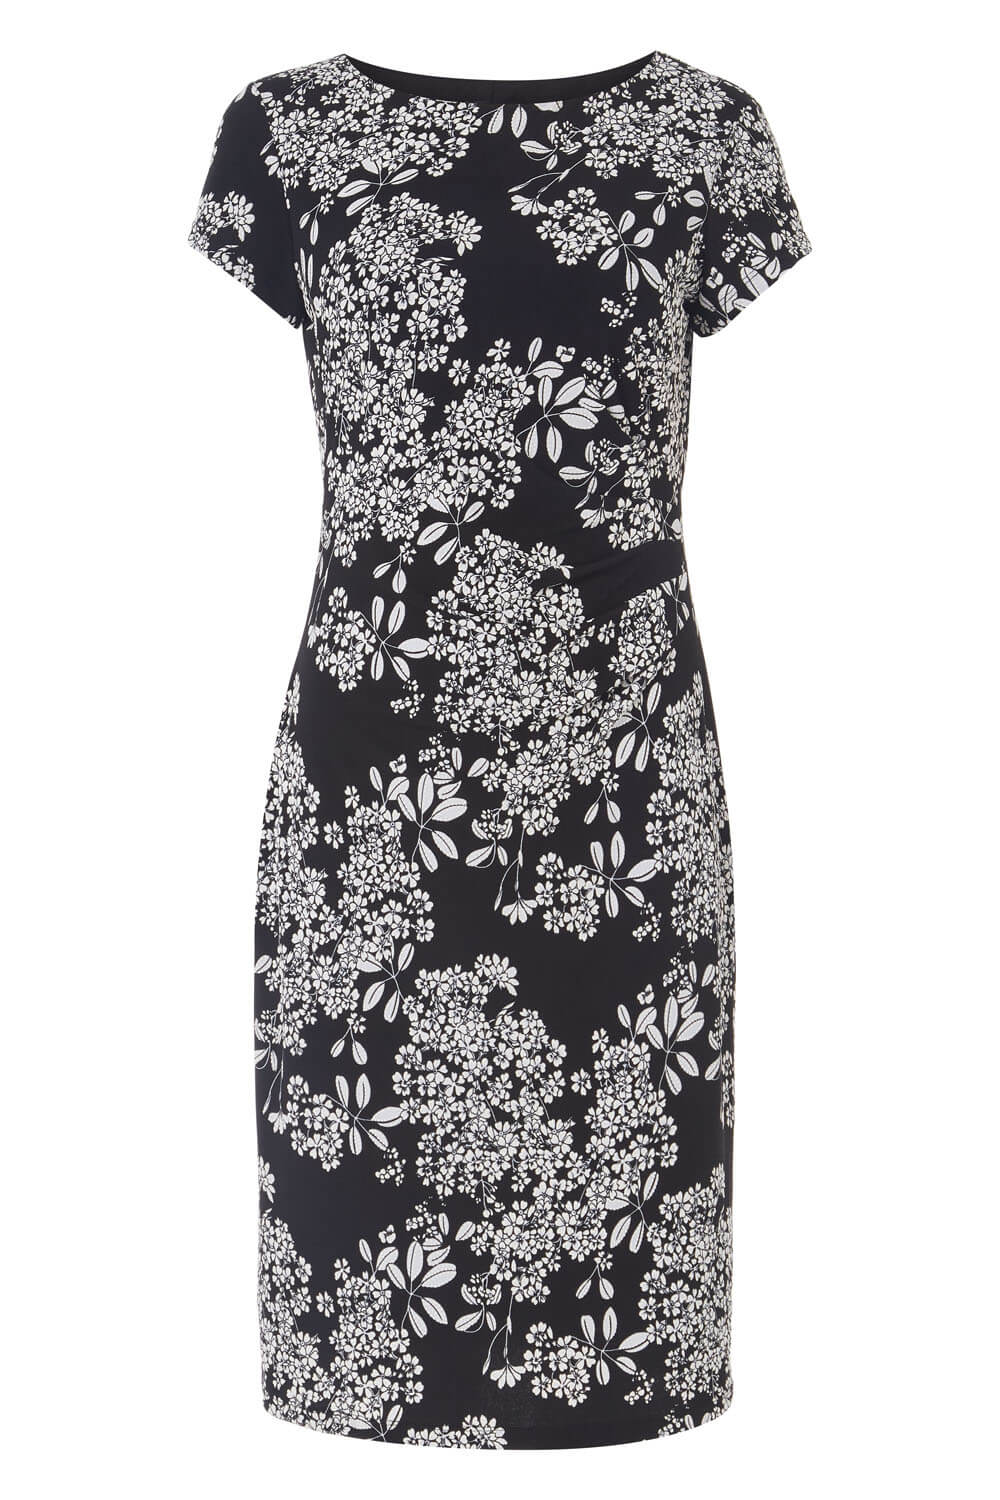 Black Oriental Floral Textured Dress, Image 5 of 5